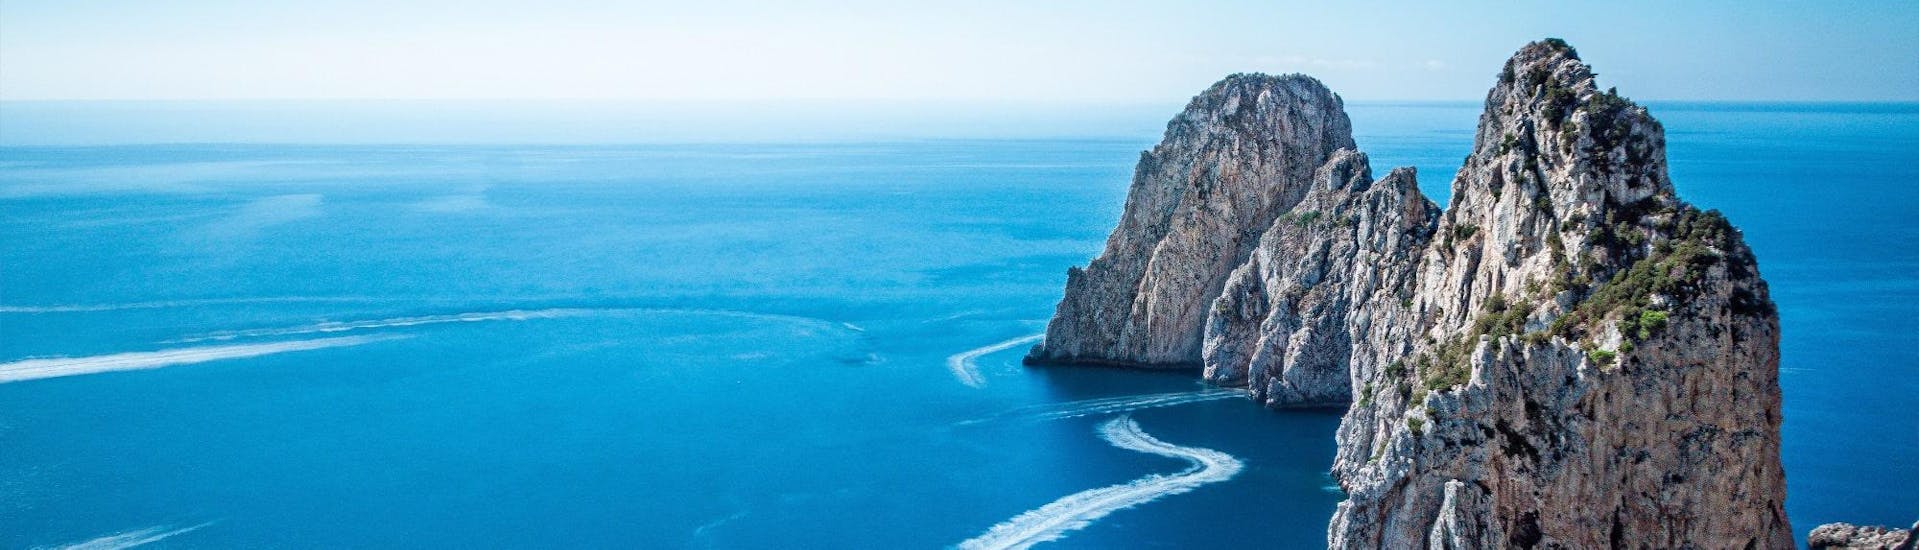 Bootstour von Sorrent nach Capri inkl. Blaue Grotte.